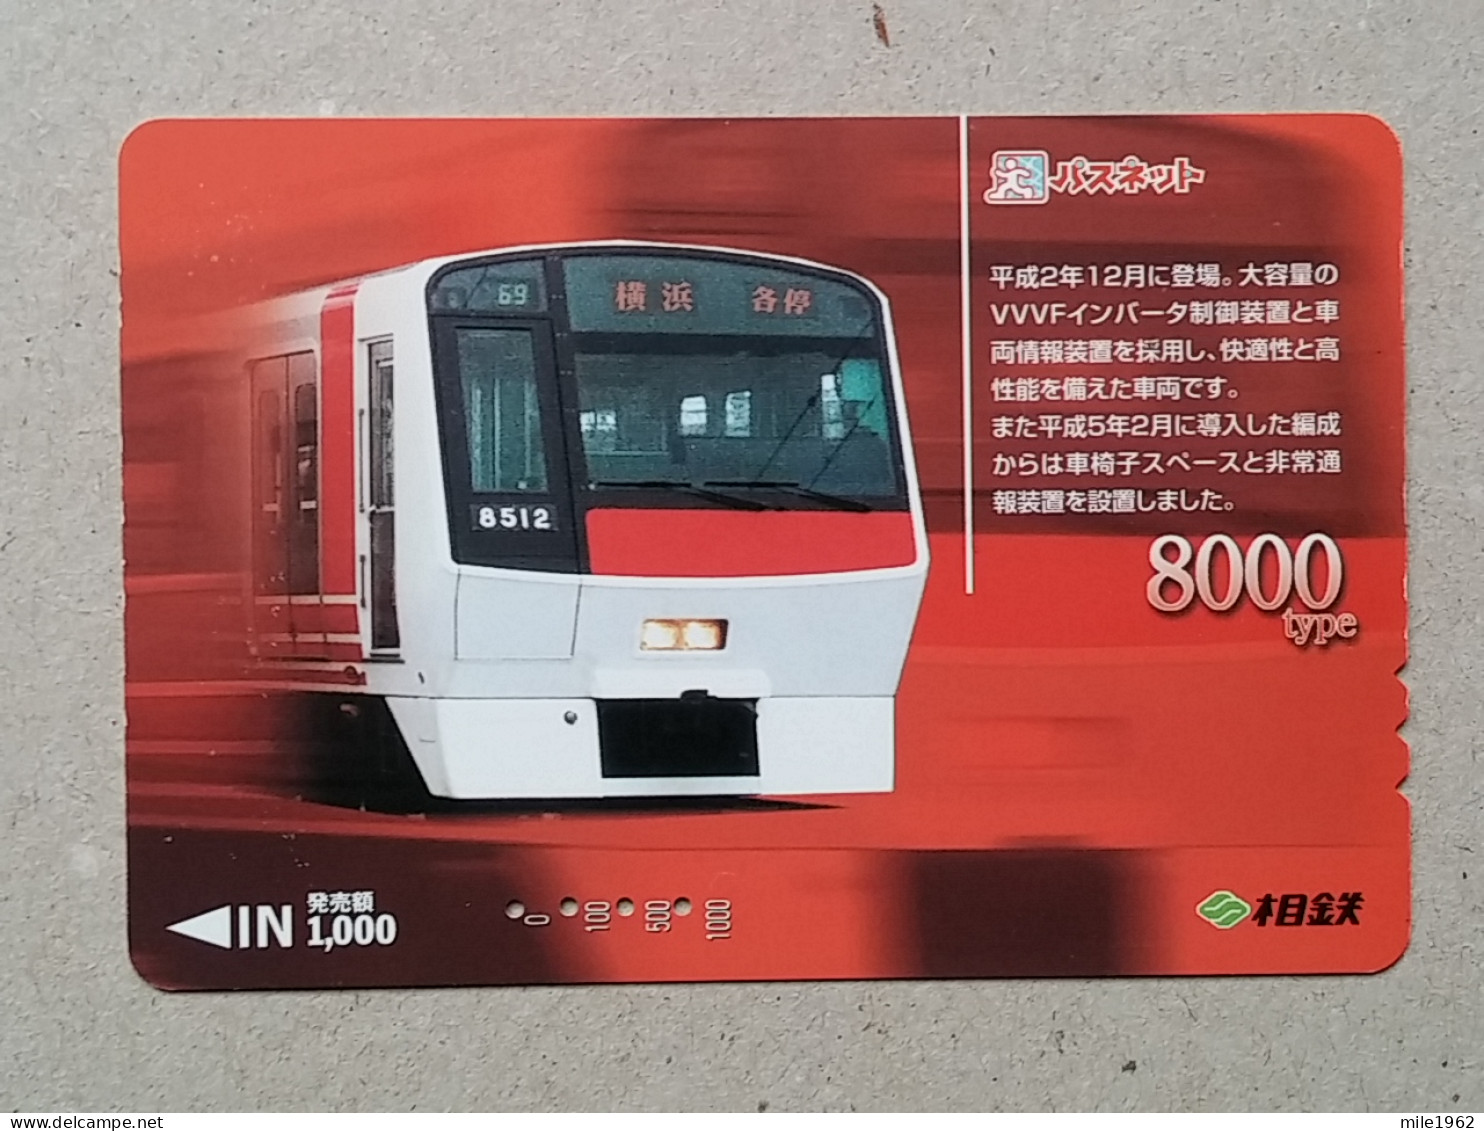 T-557- JAPAN, Japon, Nipon, Carte Prepayee, Prepaid Card, RAILWAY, TRAIN, CHEMIN DE FER - Treni